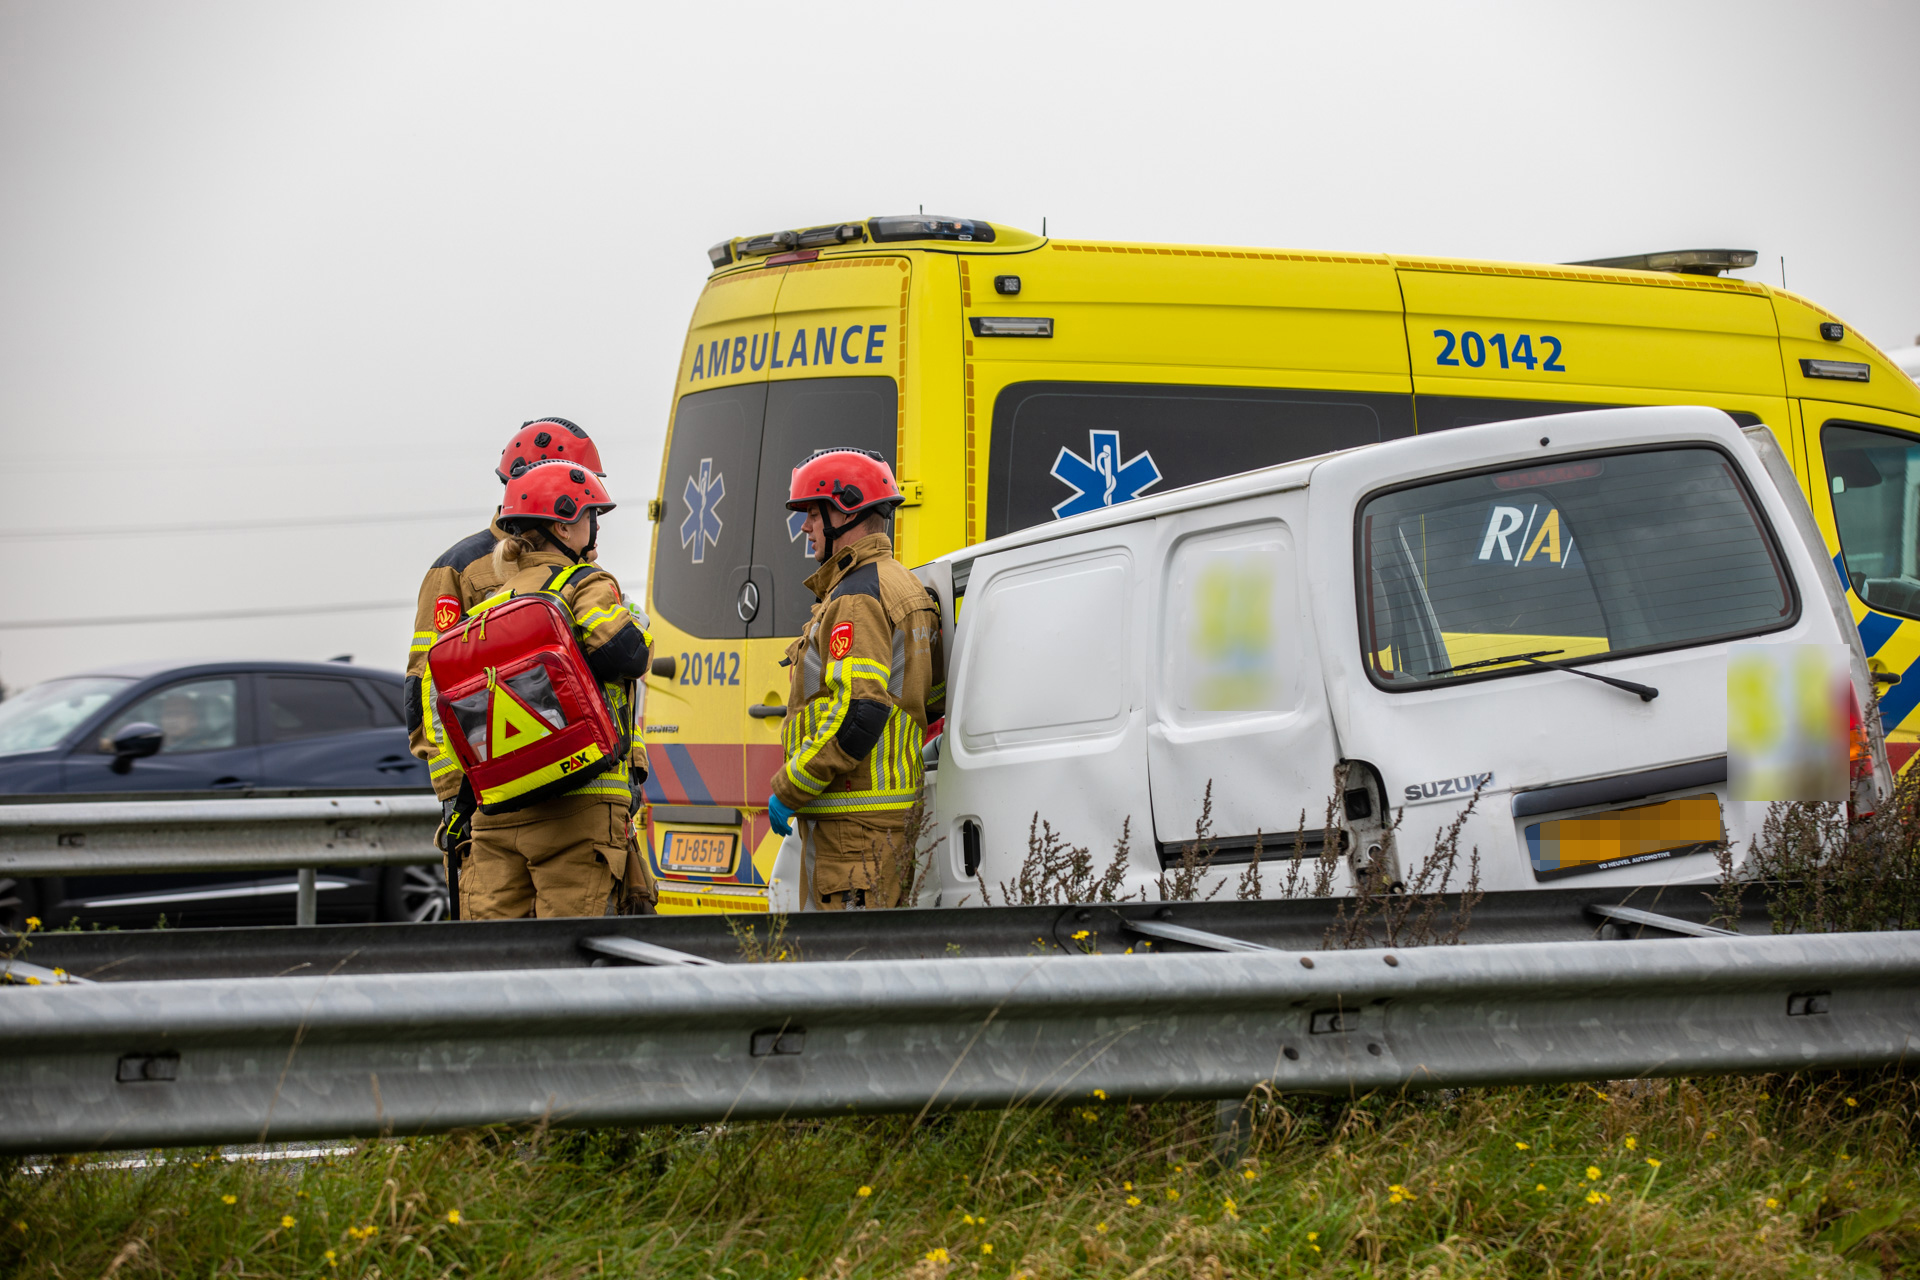 Gewonde bij ongeval op A58 in Roosendaal